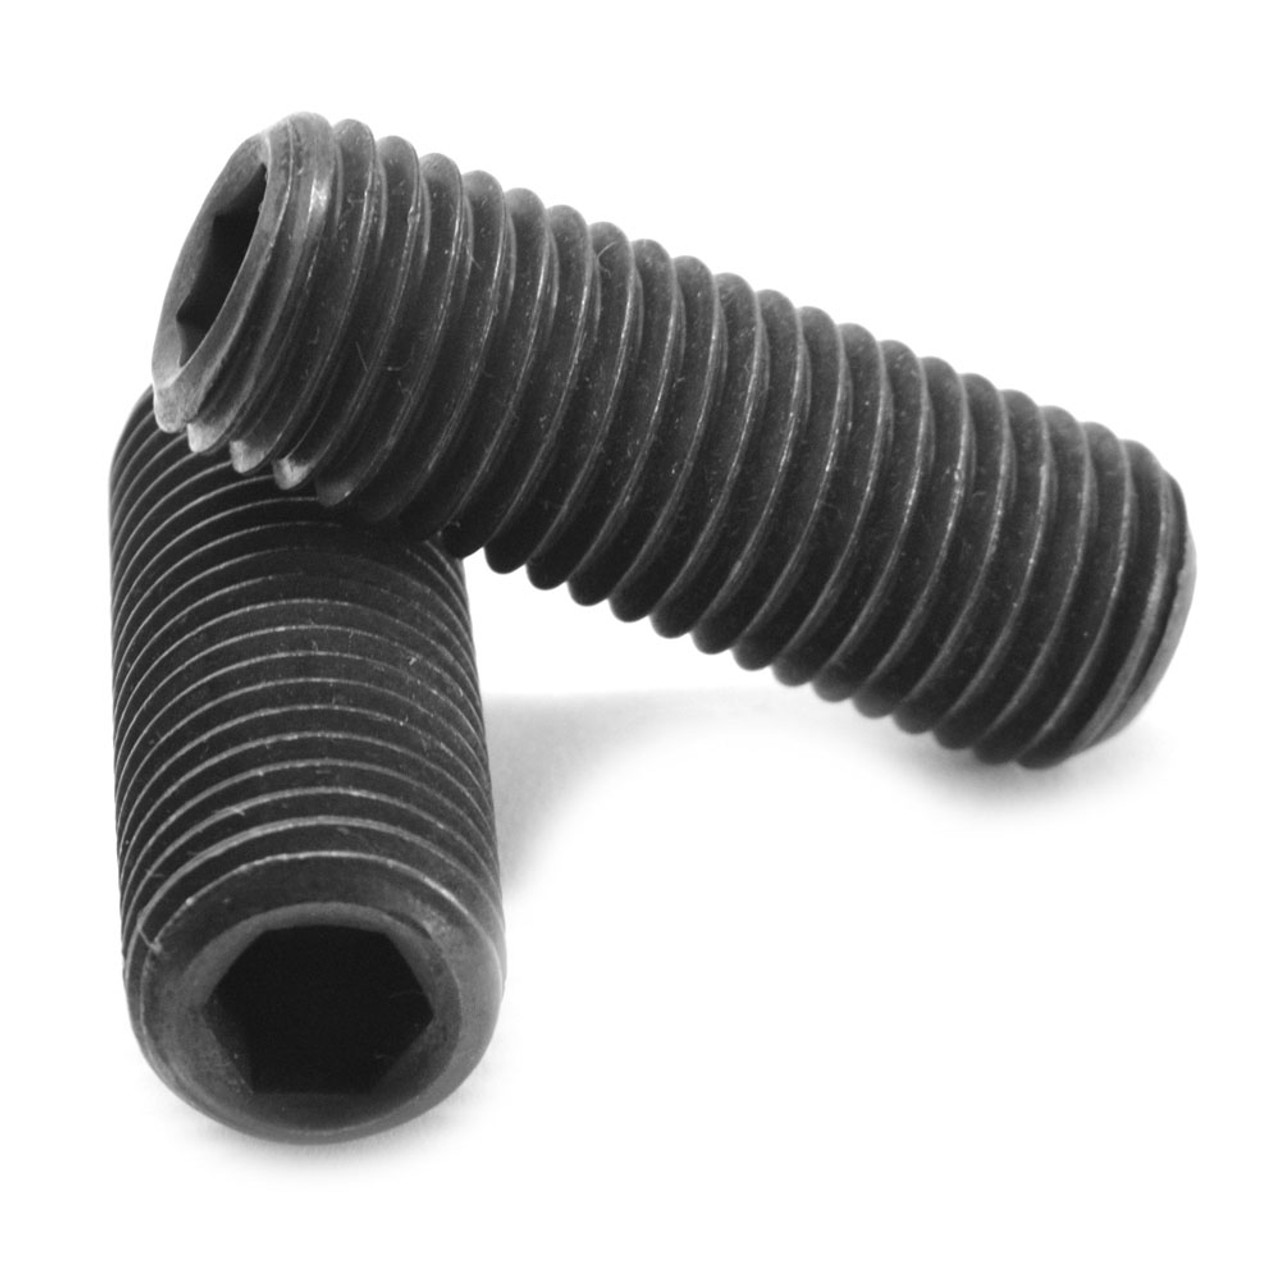 M6 x 1.00 x 18 MM Coarse Thread ISO 4029 / DIN 916 Class 45H Socket Set Screw Cup Point Alloy Steel Black Oxide